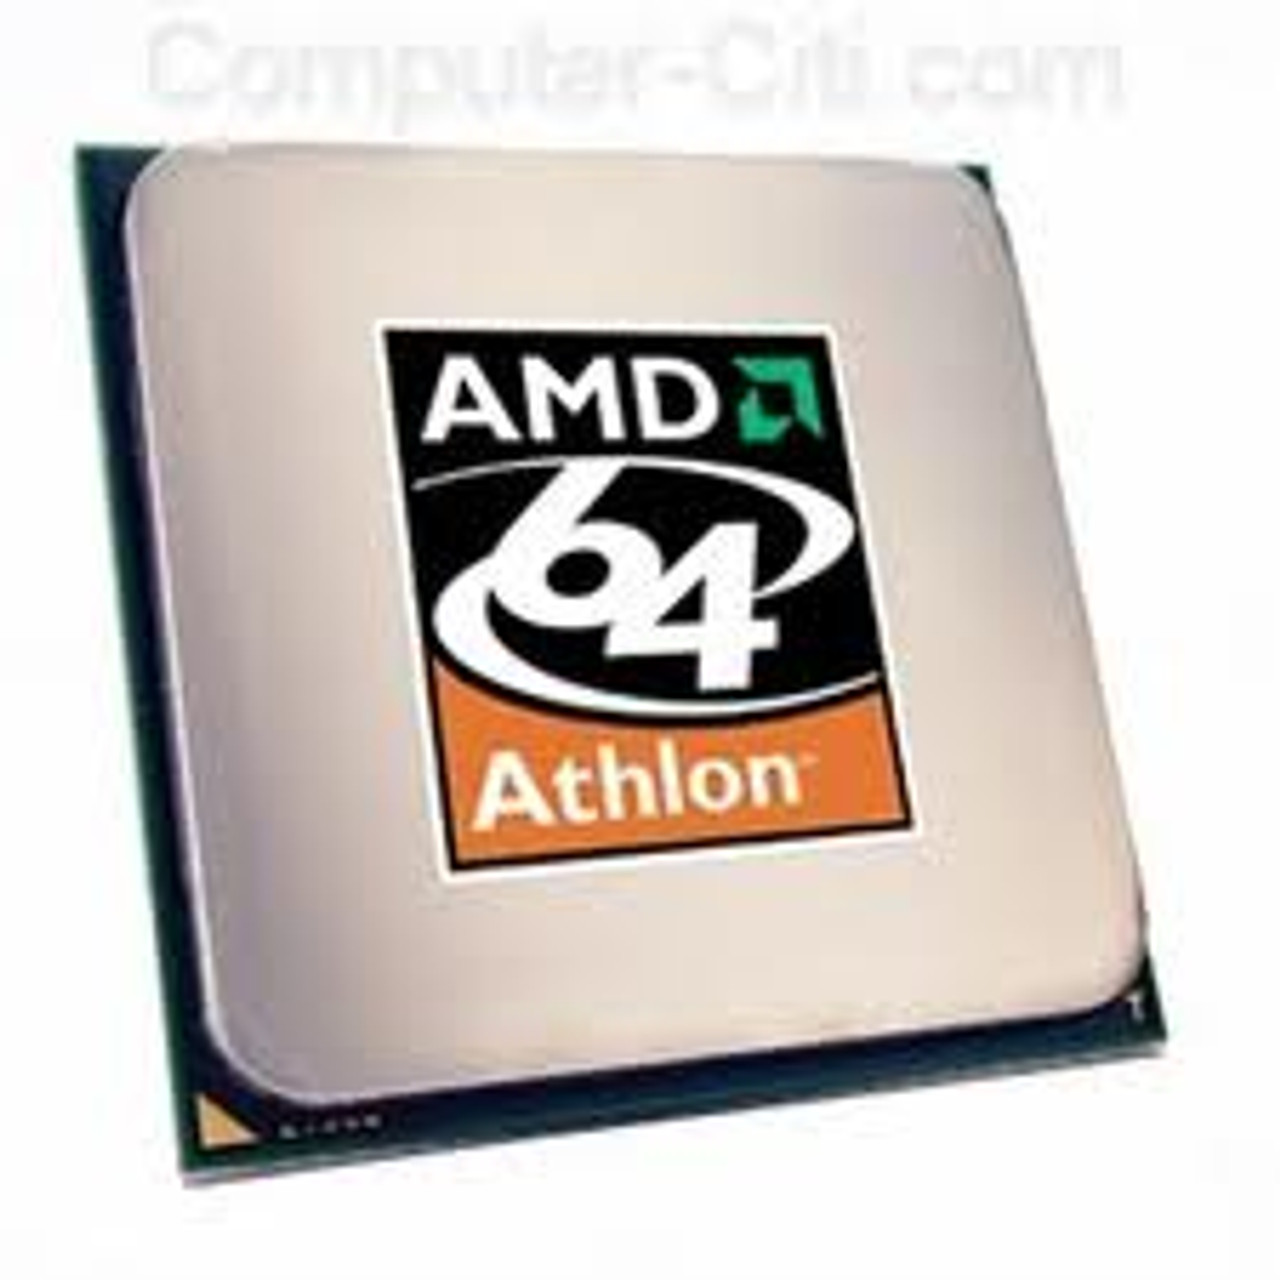 ADA3800DAA4BW AMD Athlon 64 3800+ 2.4GHz 939 Desktop CPU